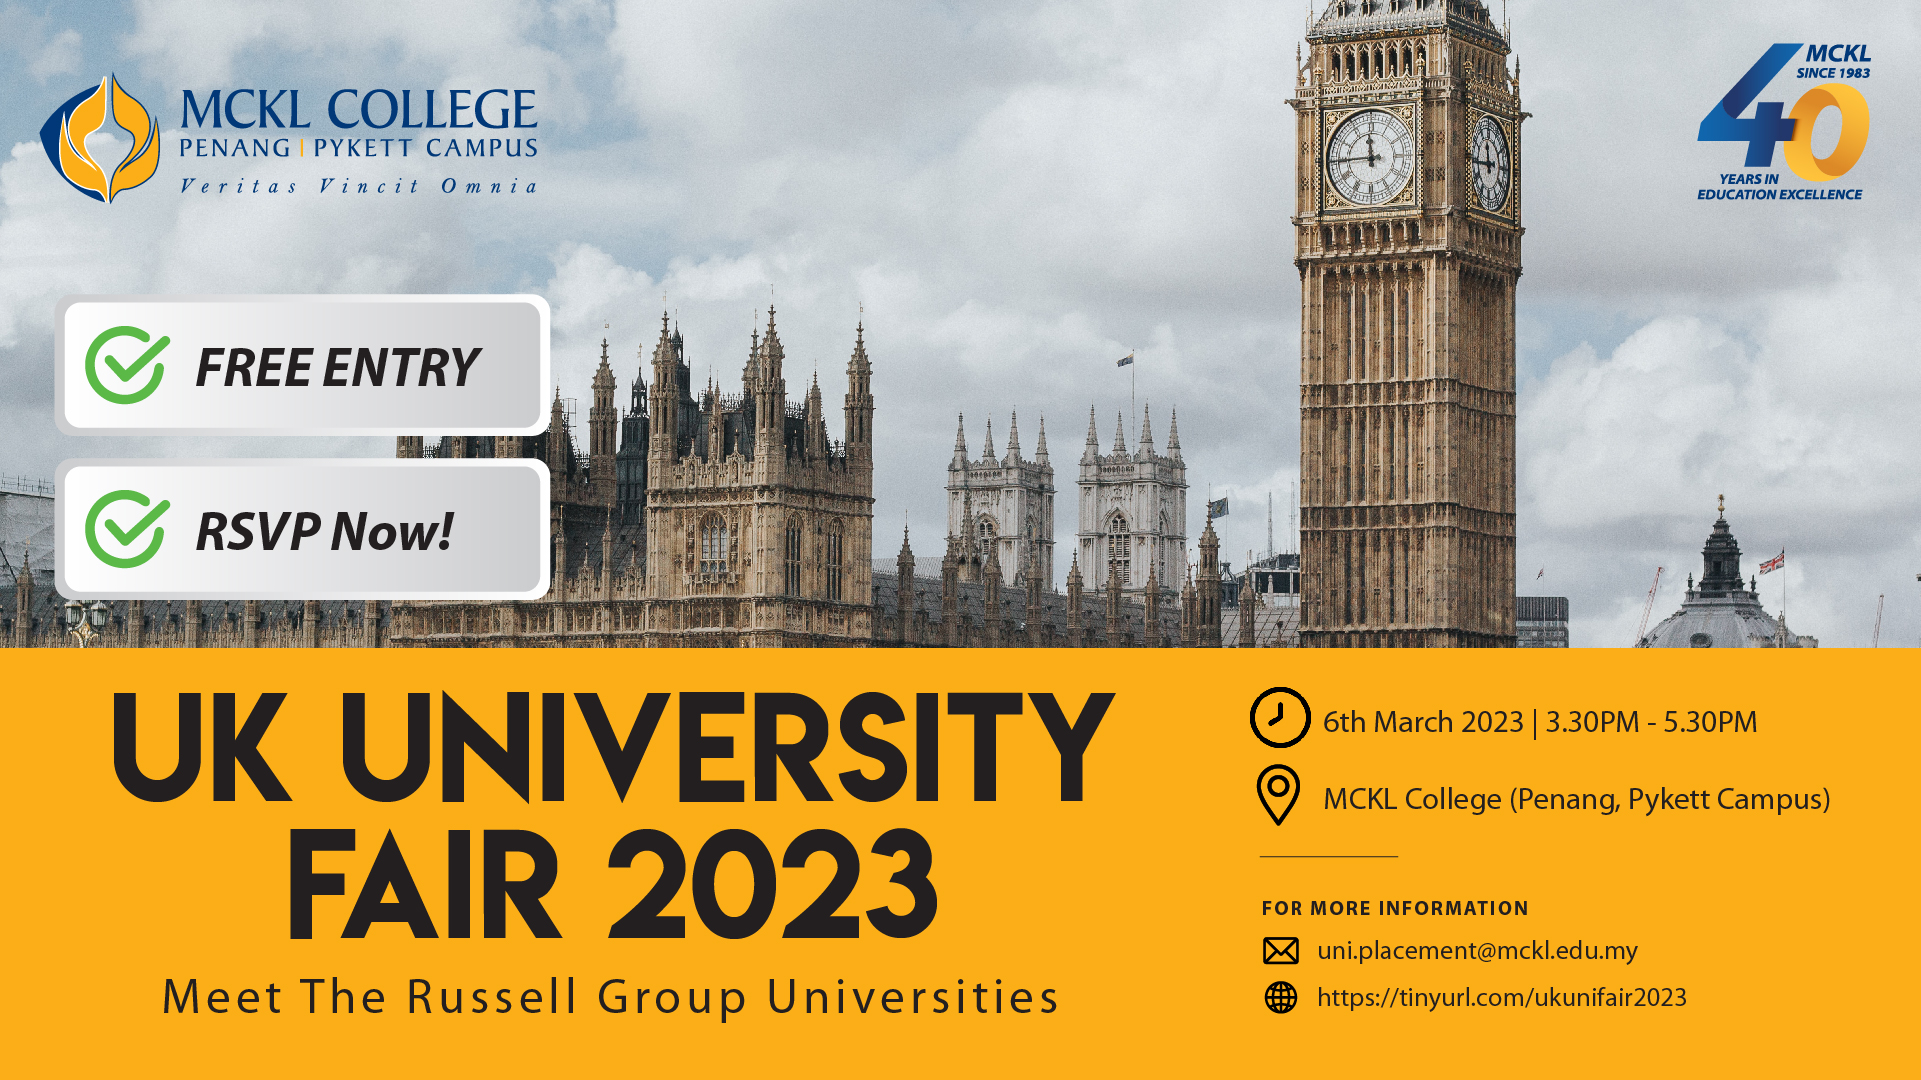 06 March 2023 UK University Fair 2023 MCKL College (Penang, Pykett